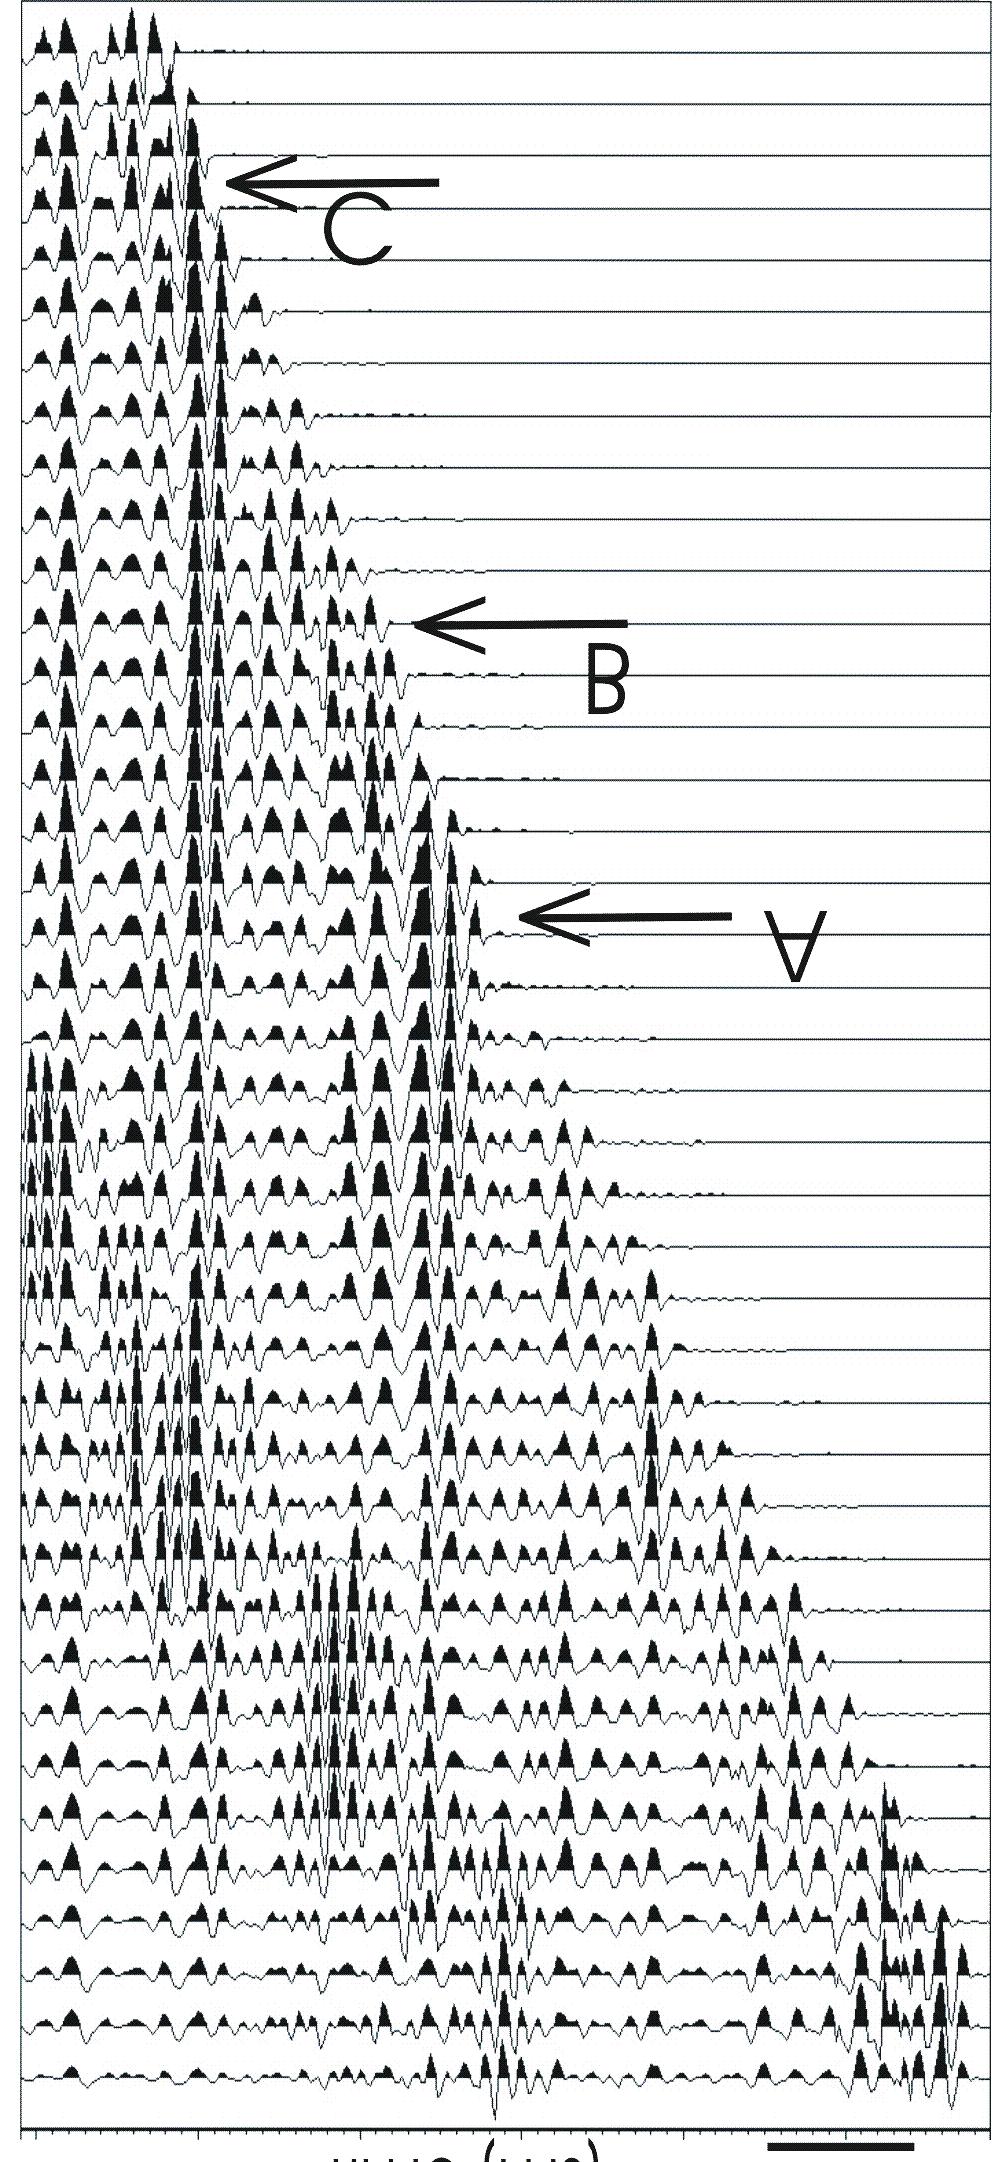 B. Milkereit et al. a) 1 ms NE 7 9 11 b) 95 125 1145 1 ms C Figure 1. a) Compressional-wave reflectivity from zero-offset vertical seismic profiling recording.